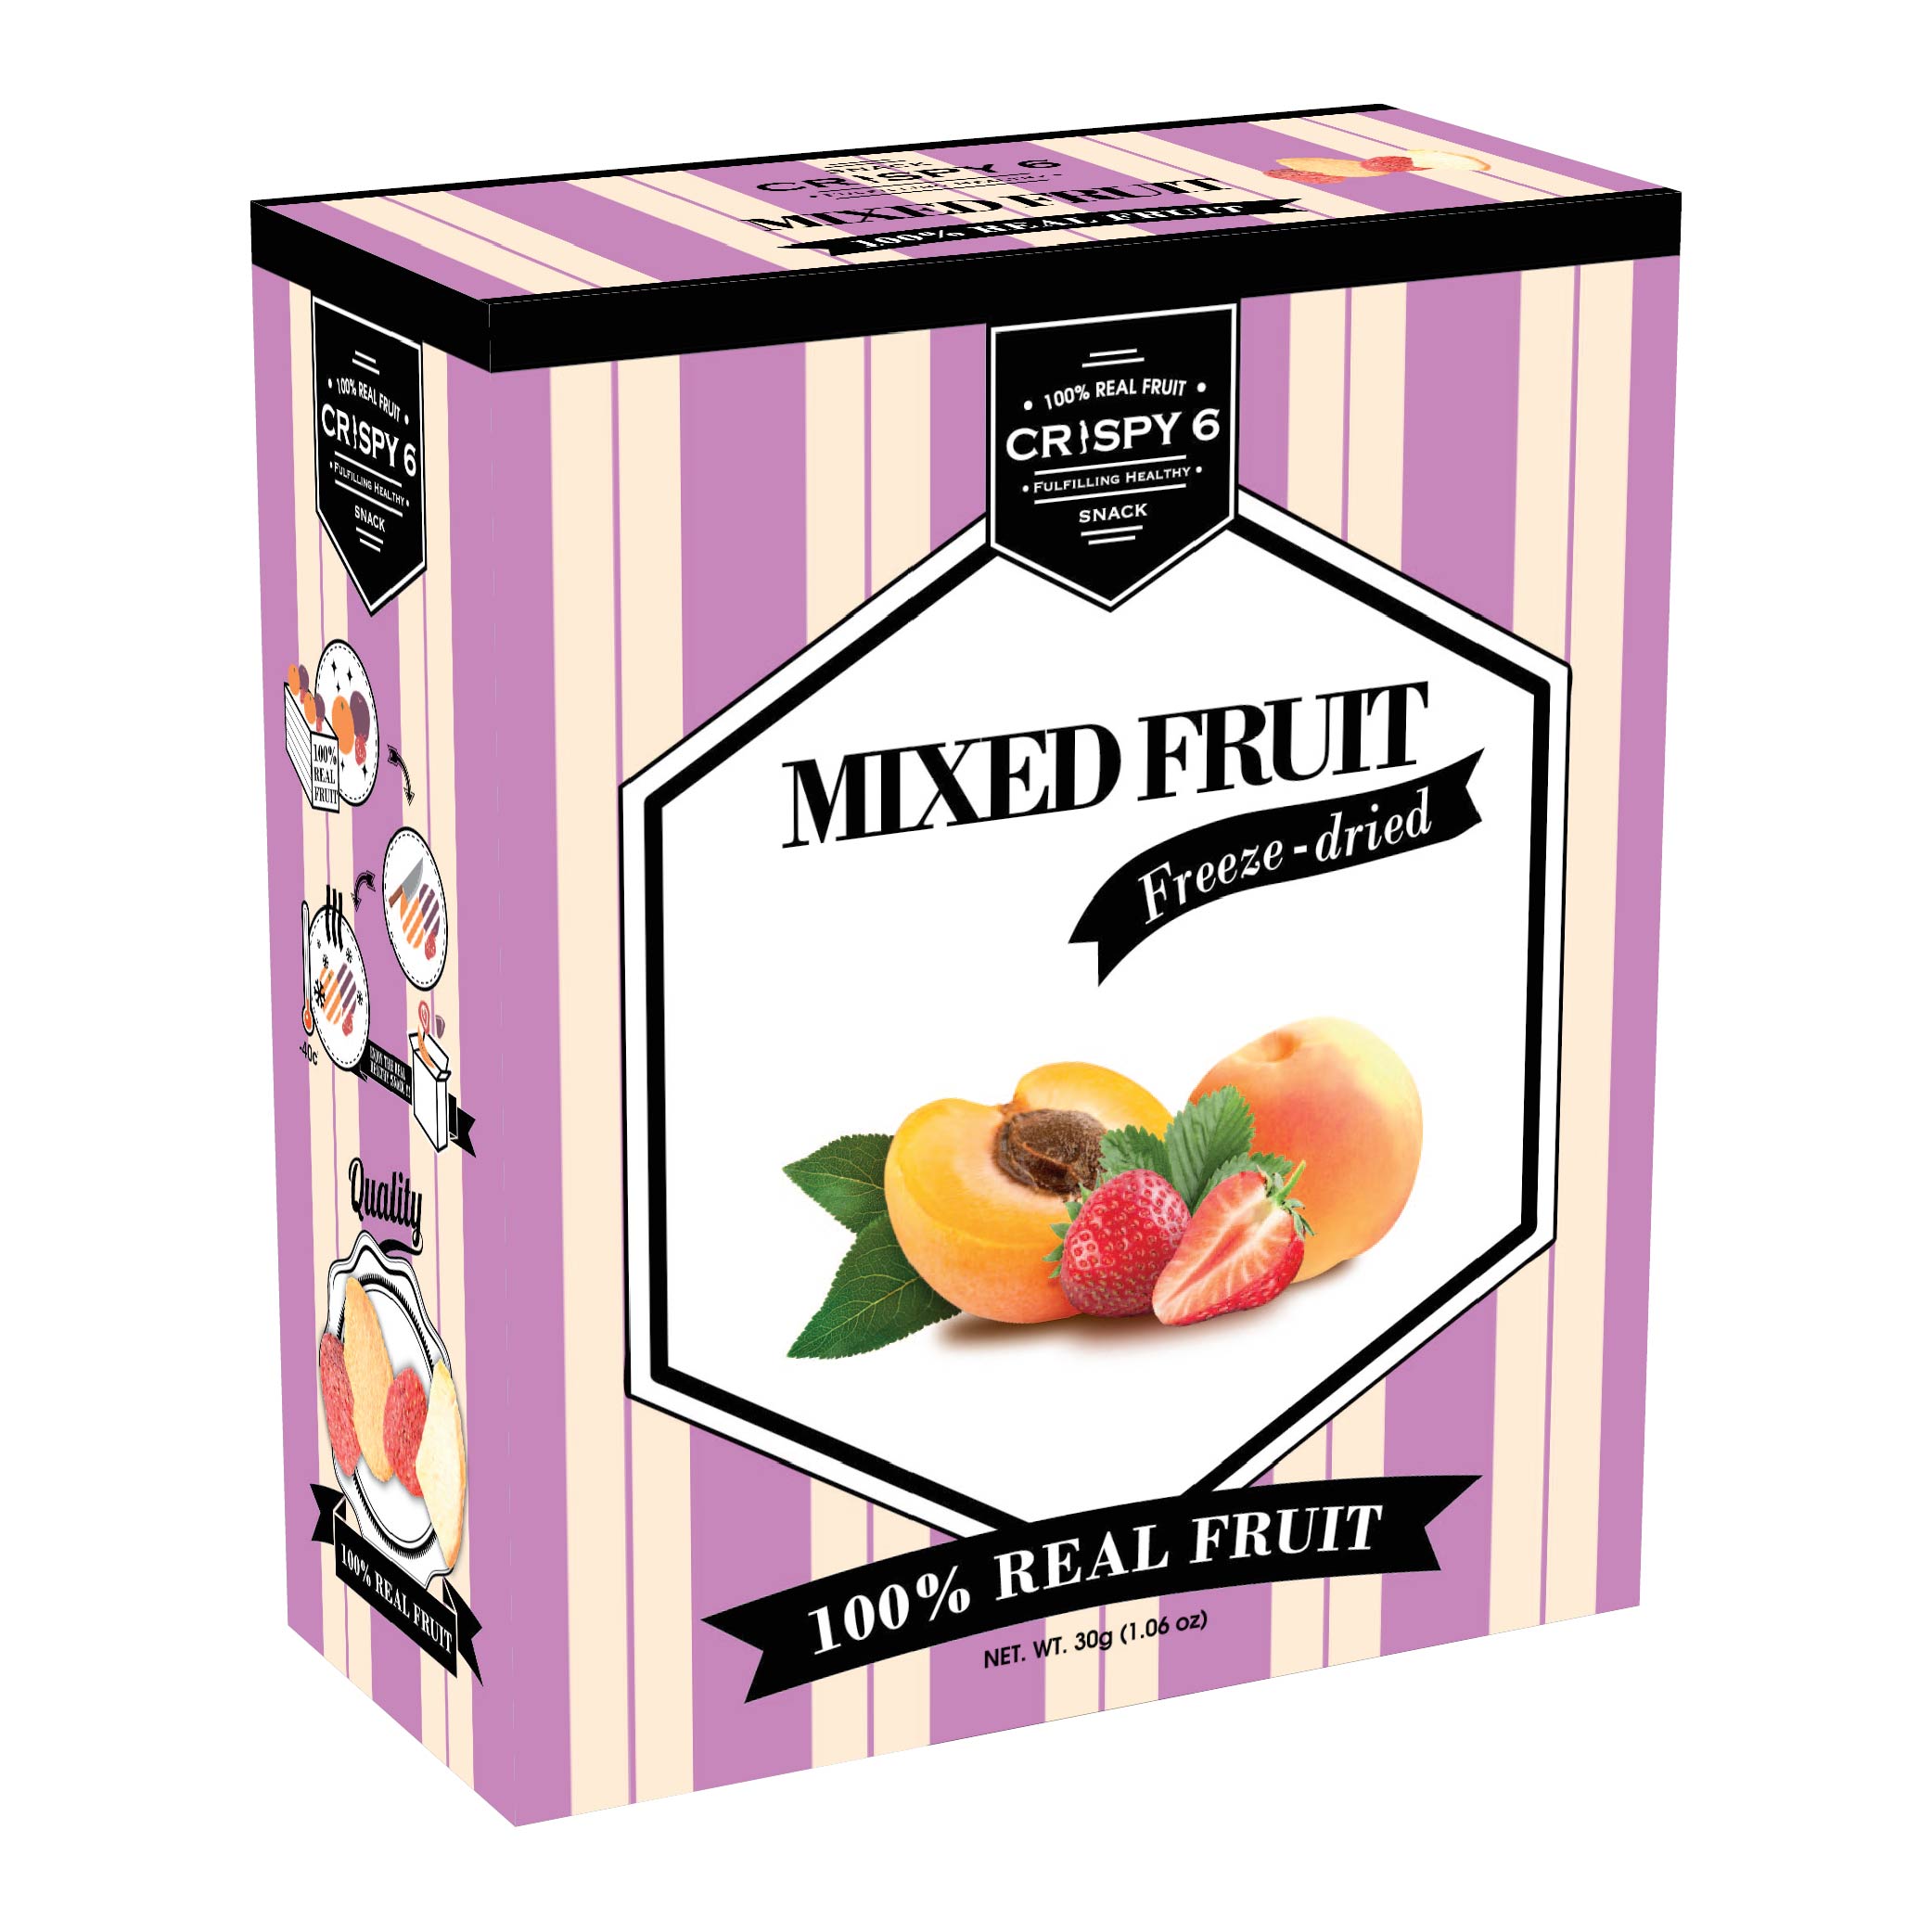 crispy-6-fd-mixedfruit